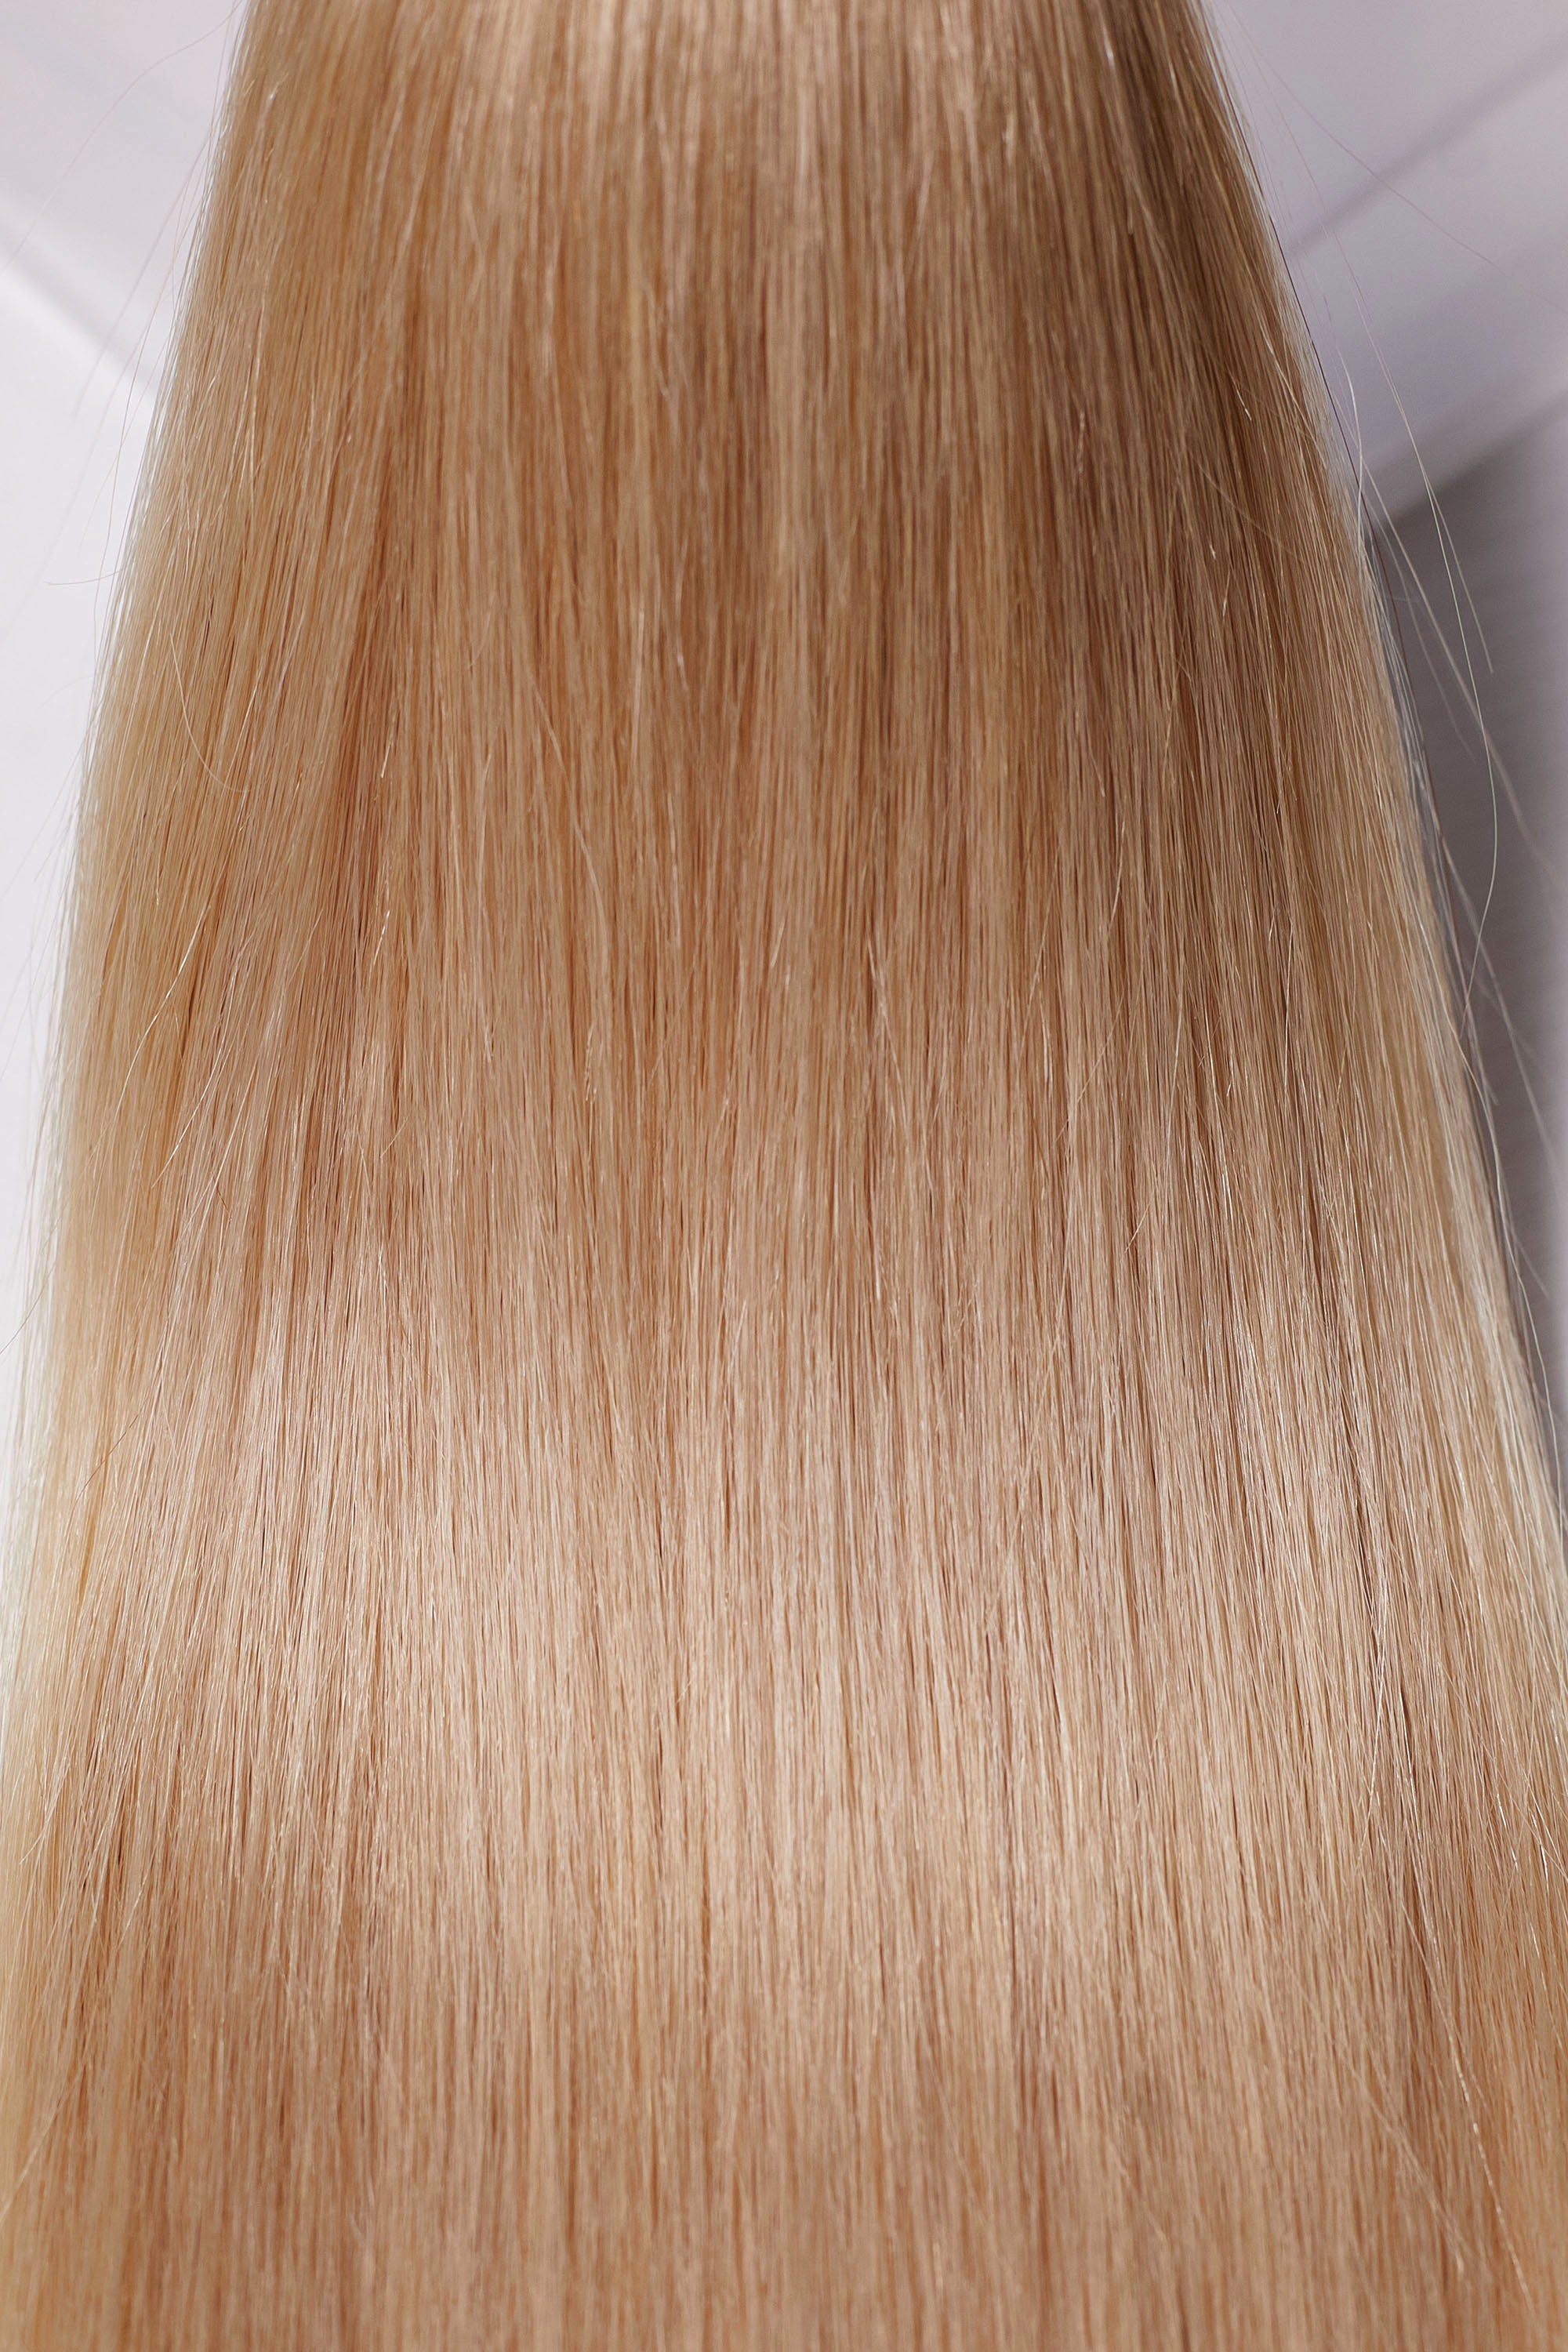 Behair professional Keratin Tip "Premium" 20" (50cm) Natural Straight Light Gold Sand #16 - 25g (1g each pcs) hair extensions